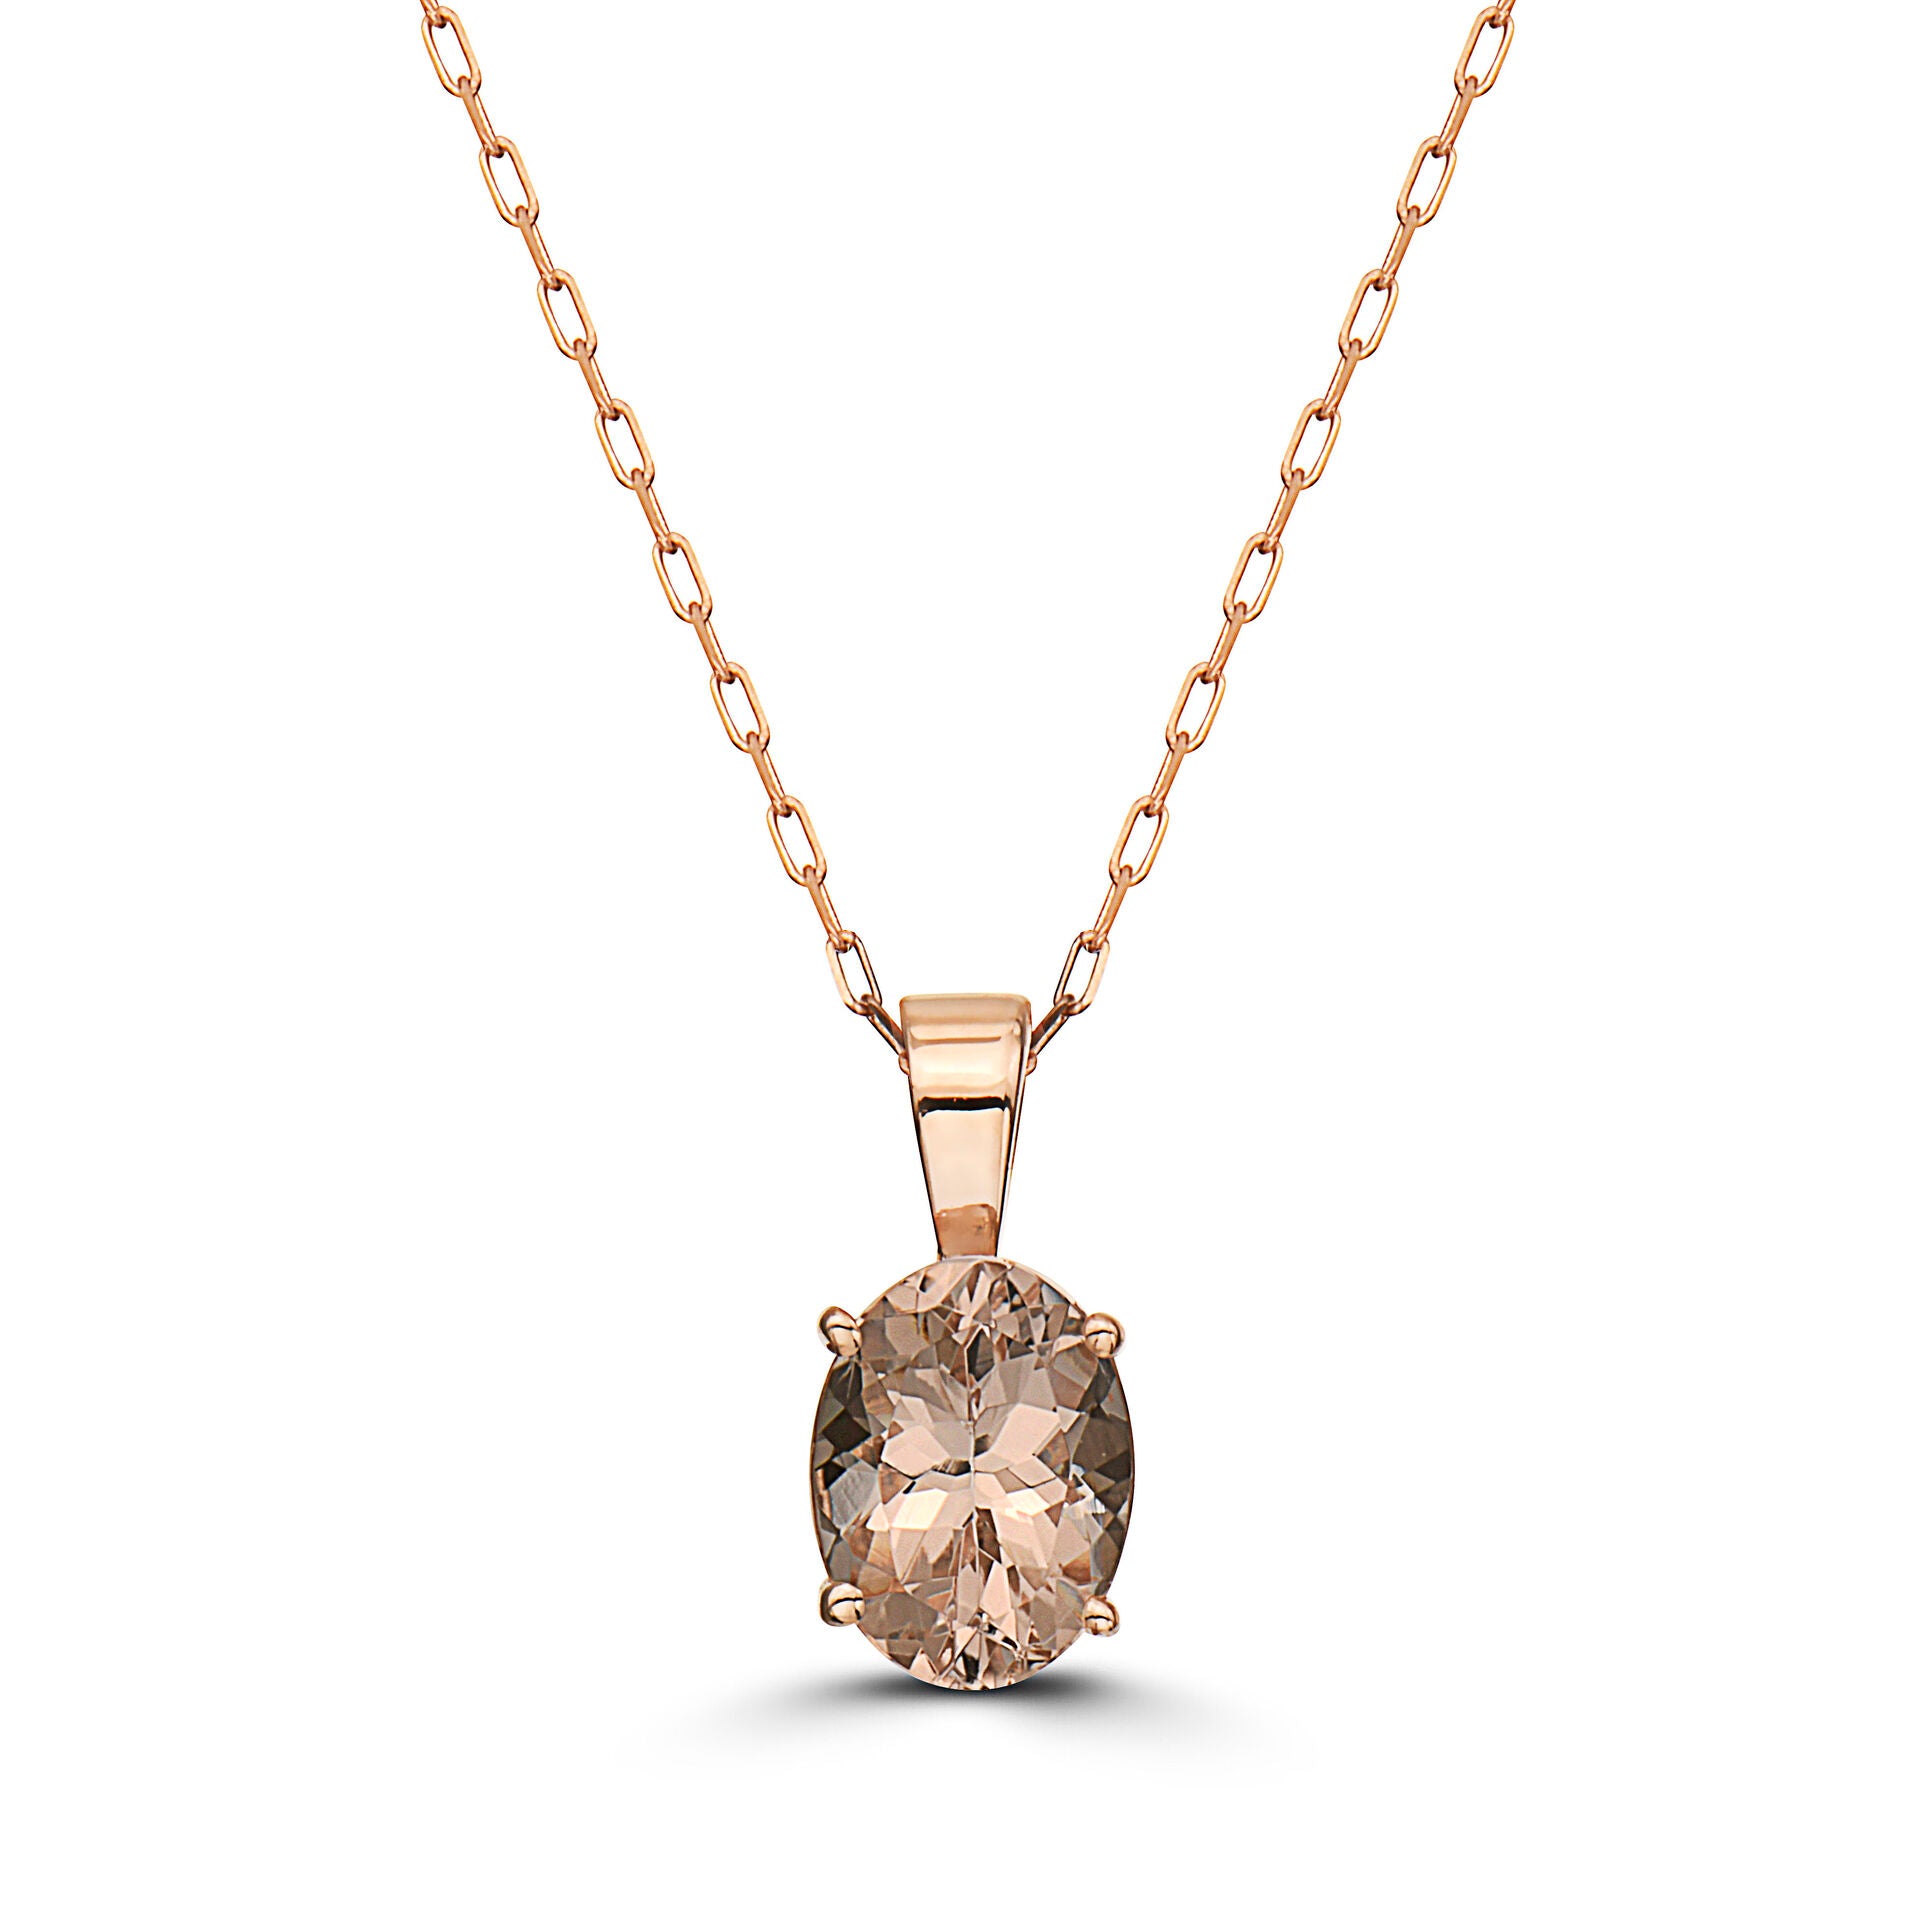 Handmade 14K Rose Gold Morganite and Diamond Pendant - Larc Jewelers